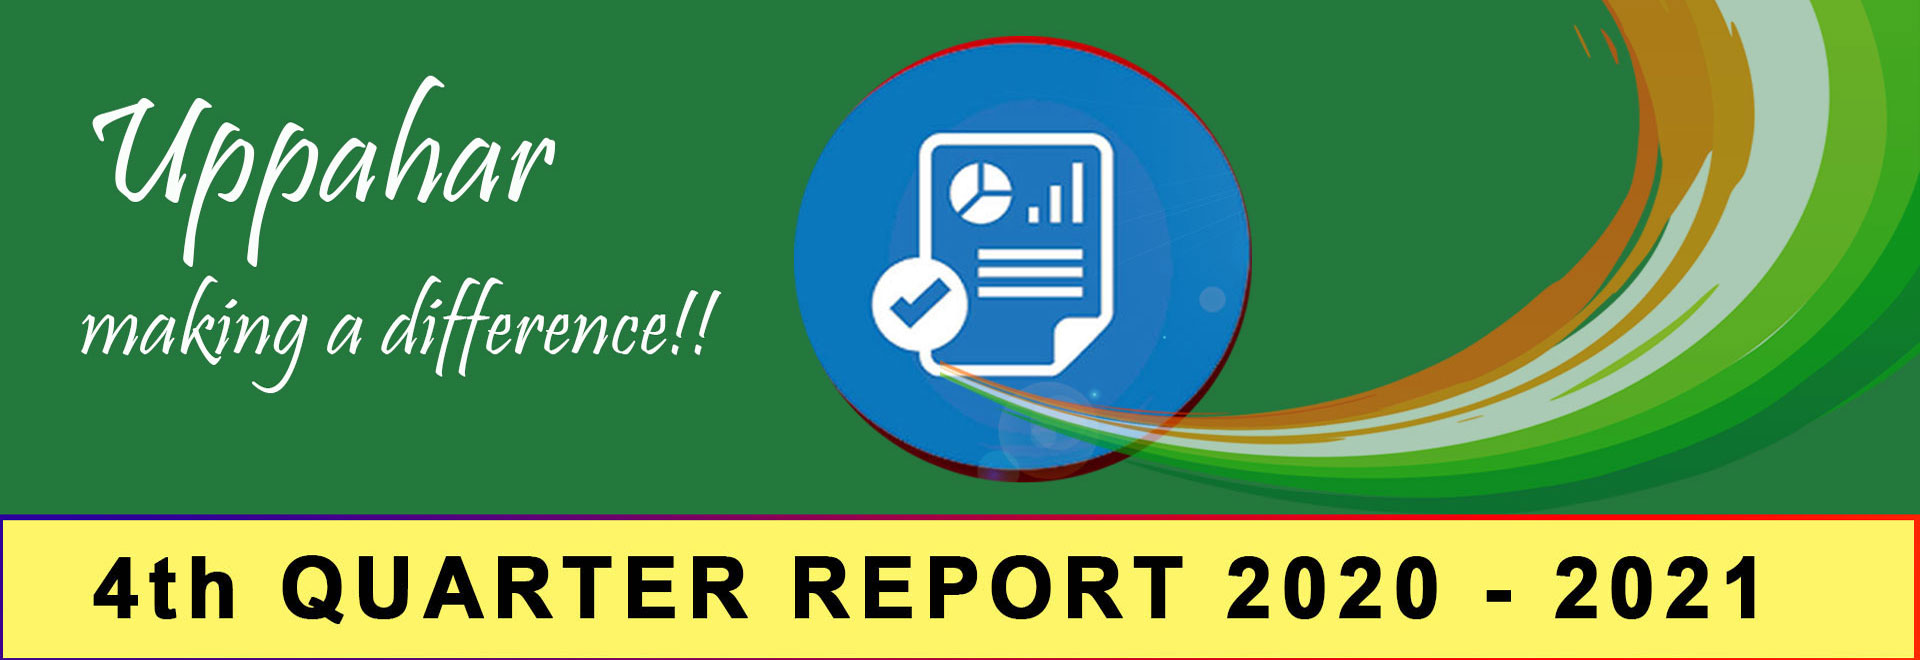 Uppahar India 4th Quarterly Report 2020-2021